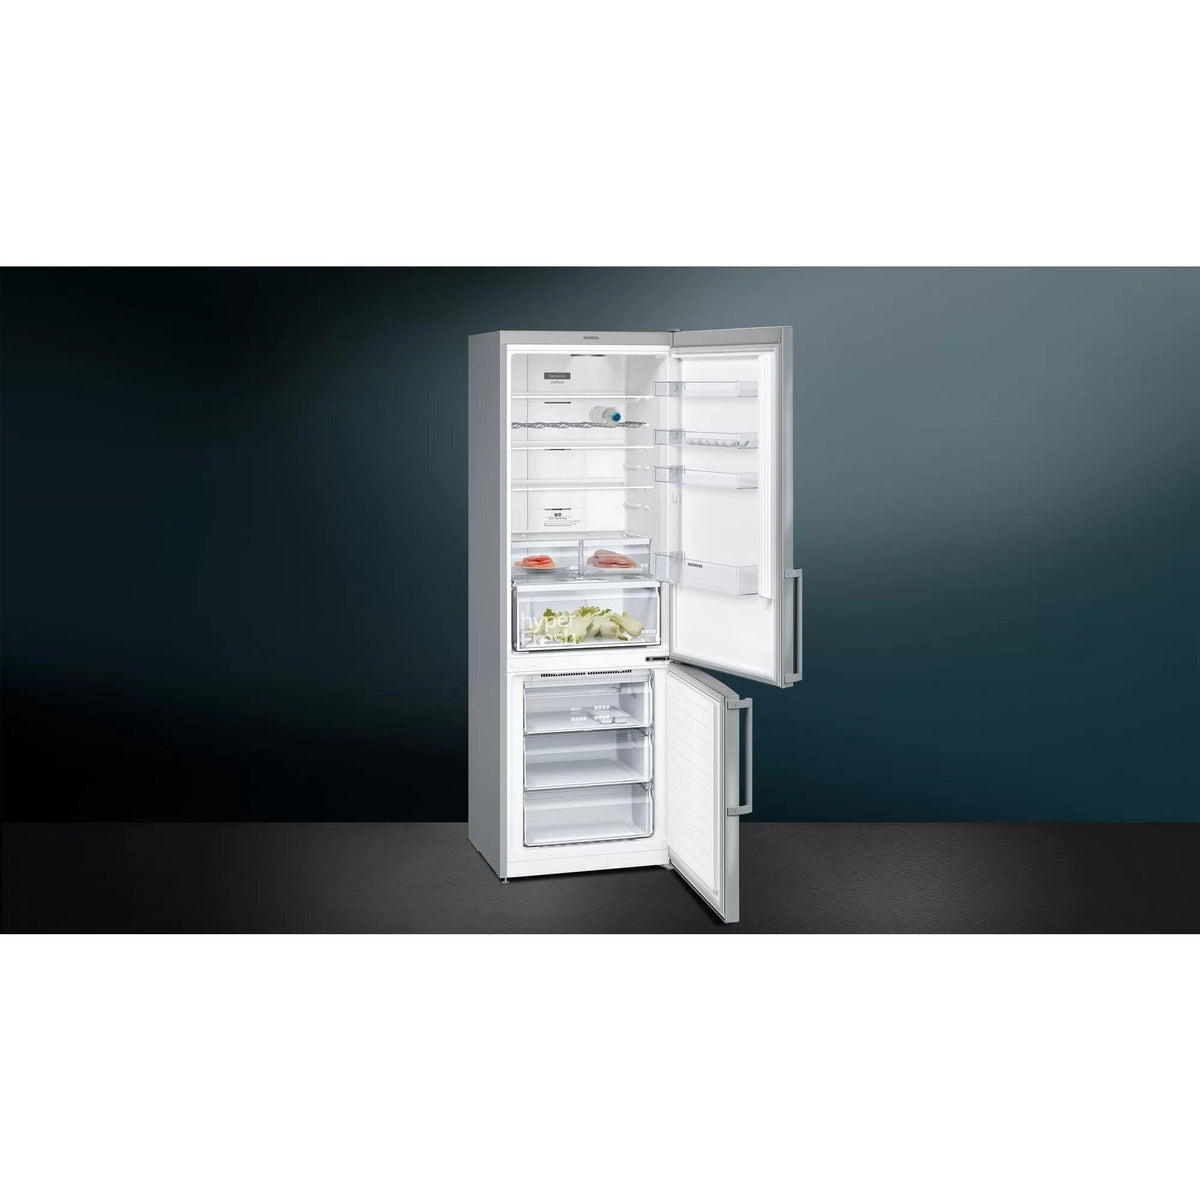 Siemens 73/30 No Frost Freestanding Fridge Freezer - Inox | KG49NXIEPG from DID Electrical - guaranteed Irish, guaranteed quality service. (6890918772924)